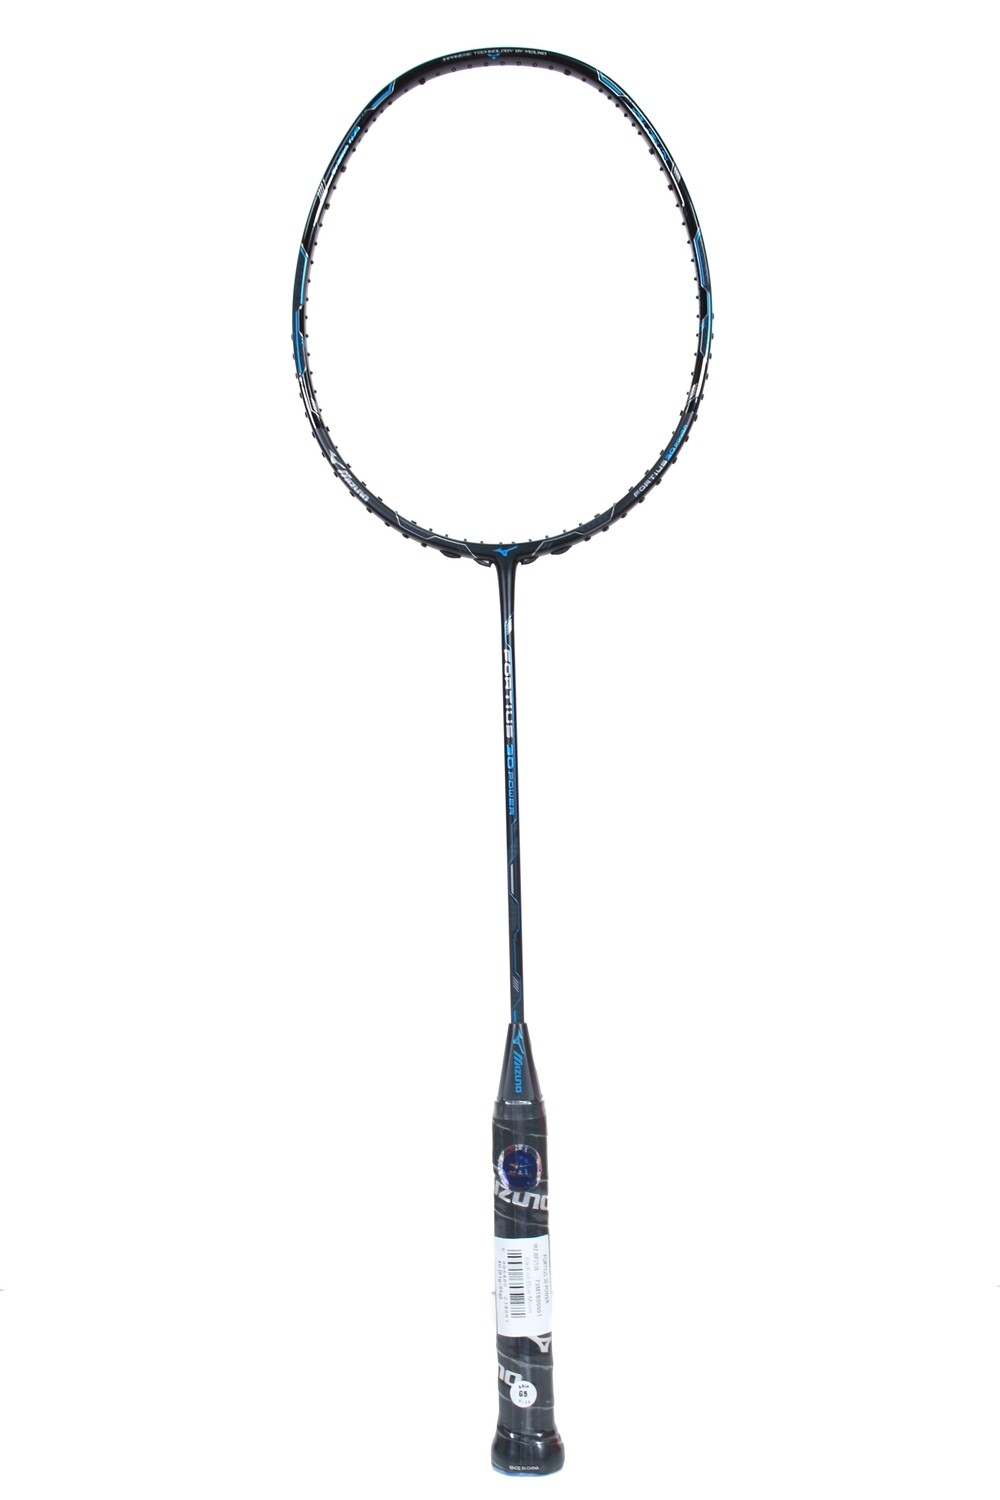 Mizuno Fortius 30 Power Badminton Racket